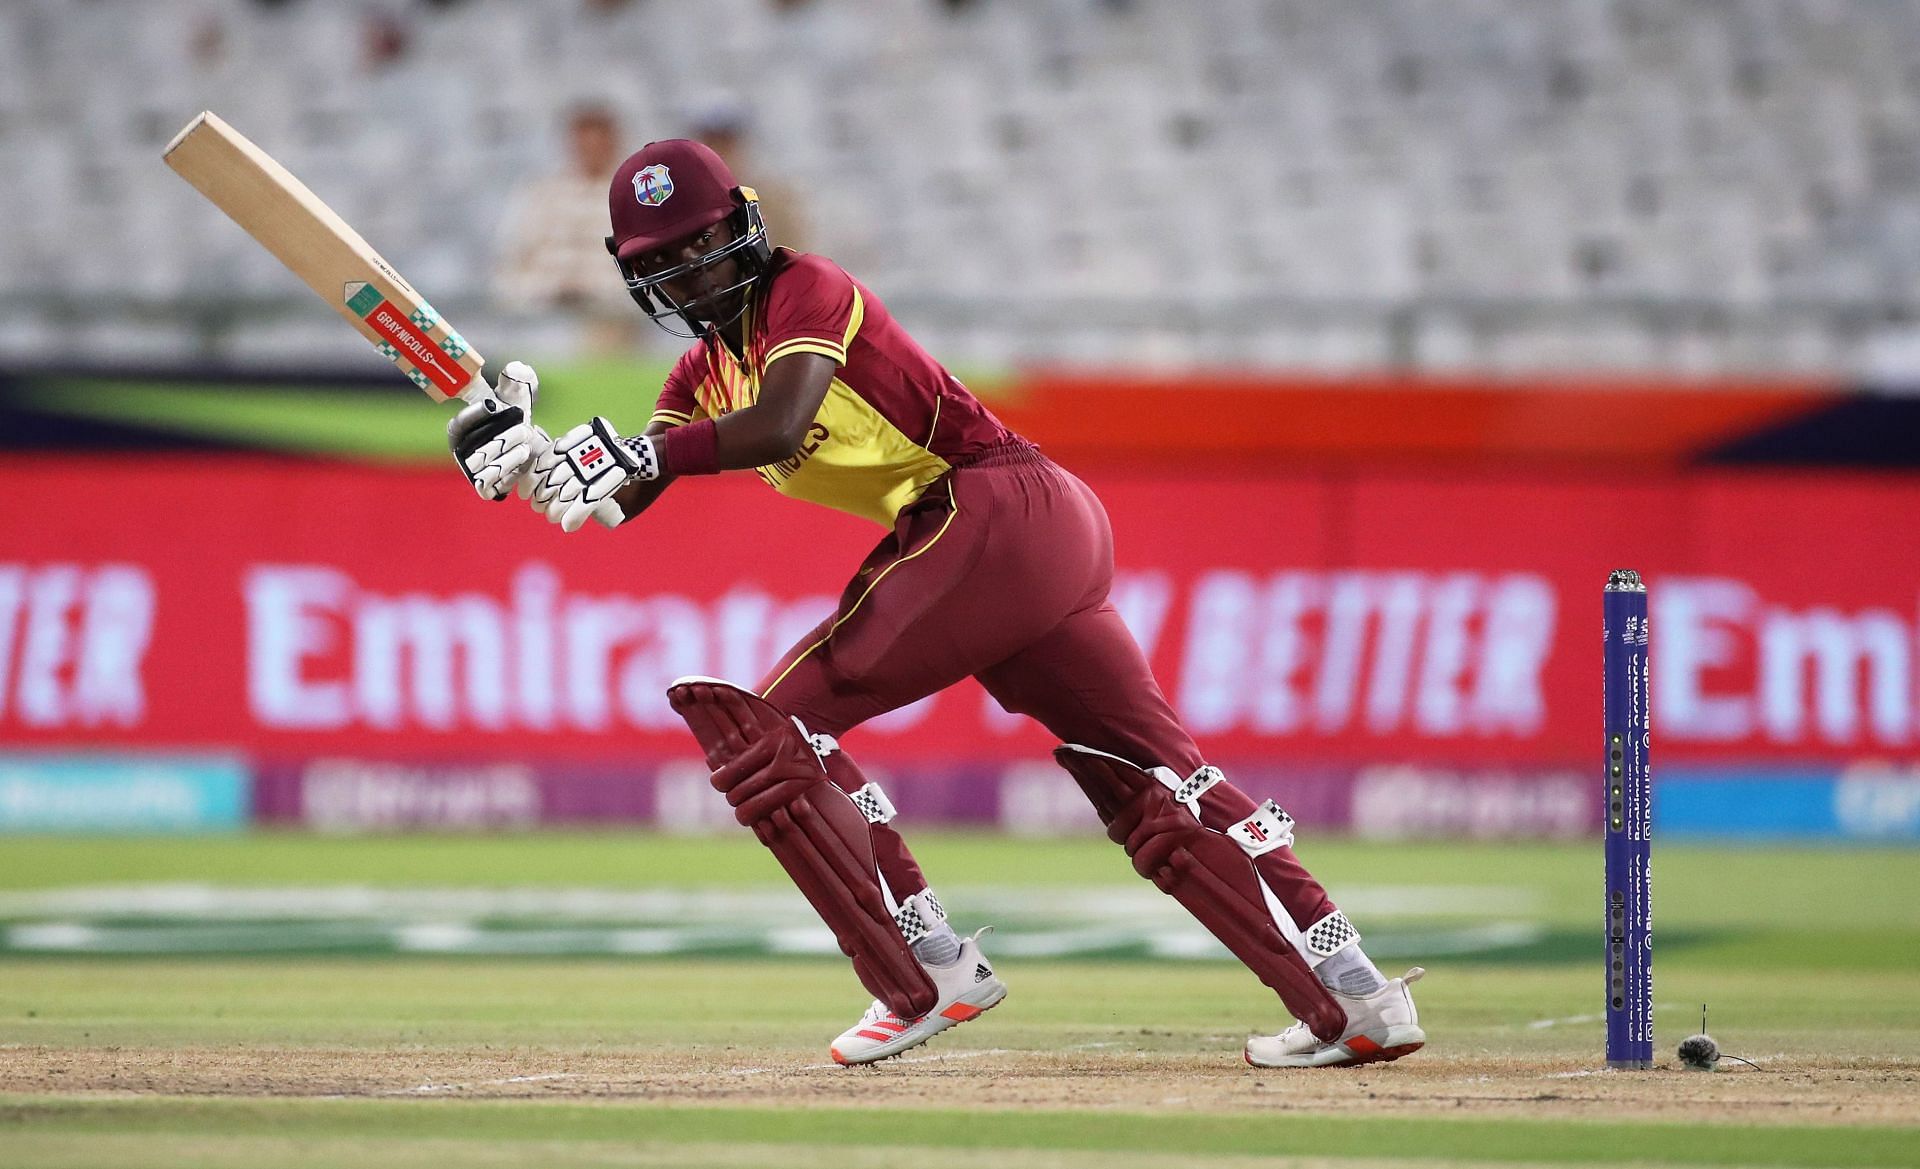 Rashada Williams in action (Image Courtesy: ICC Cricket World Cup)